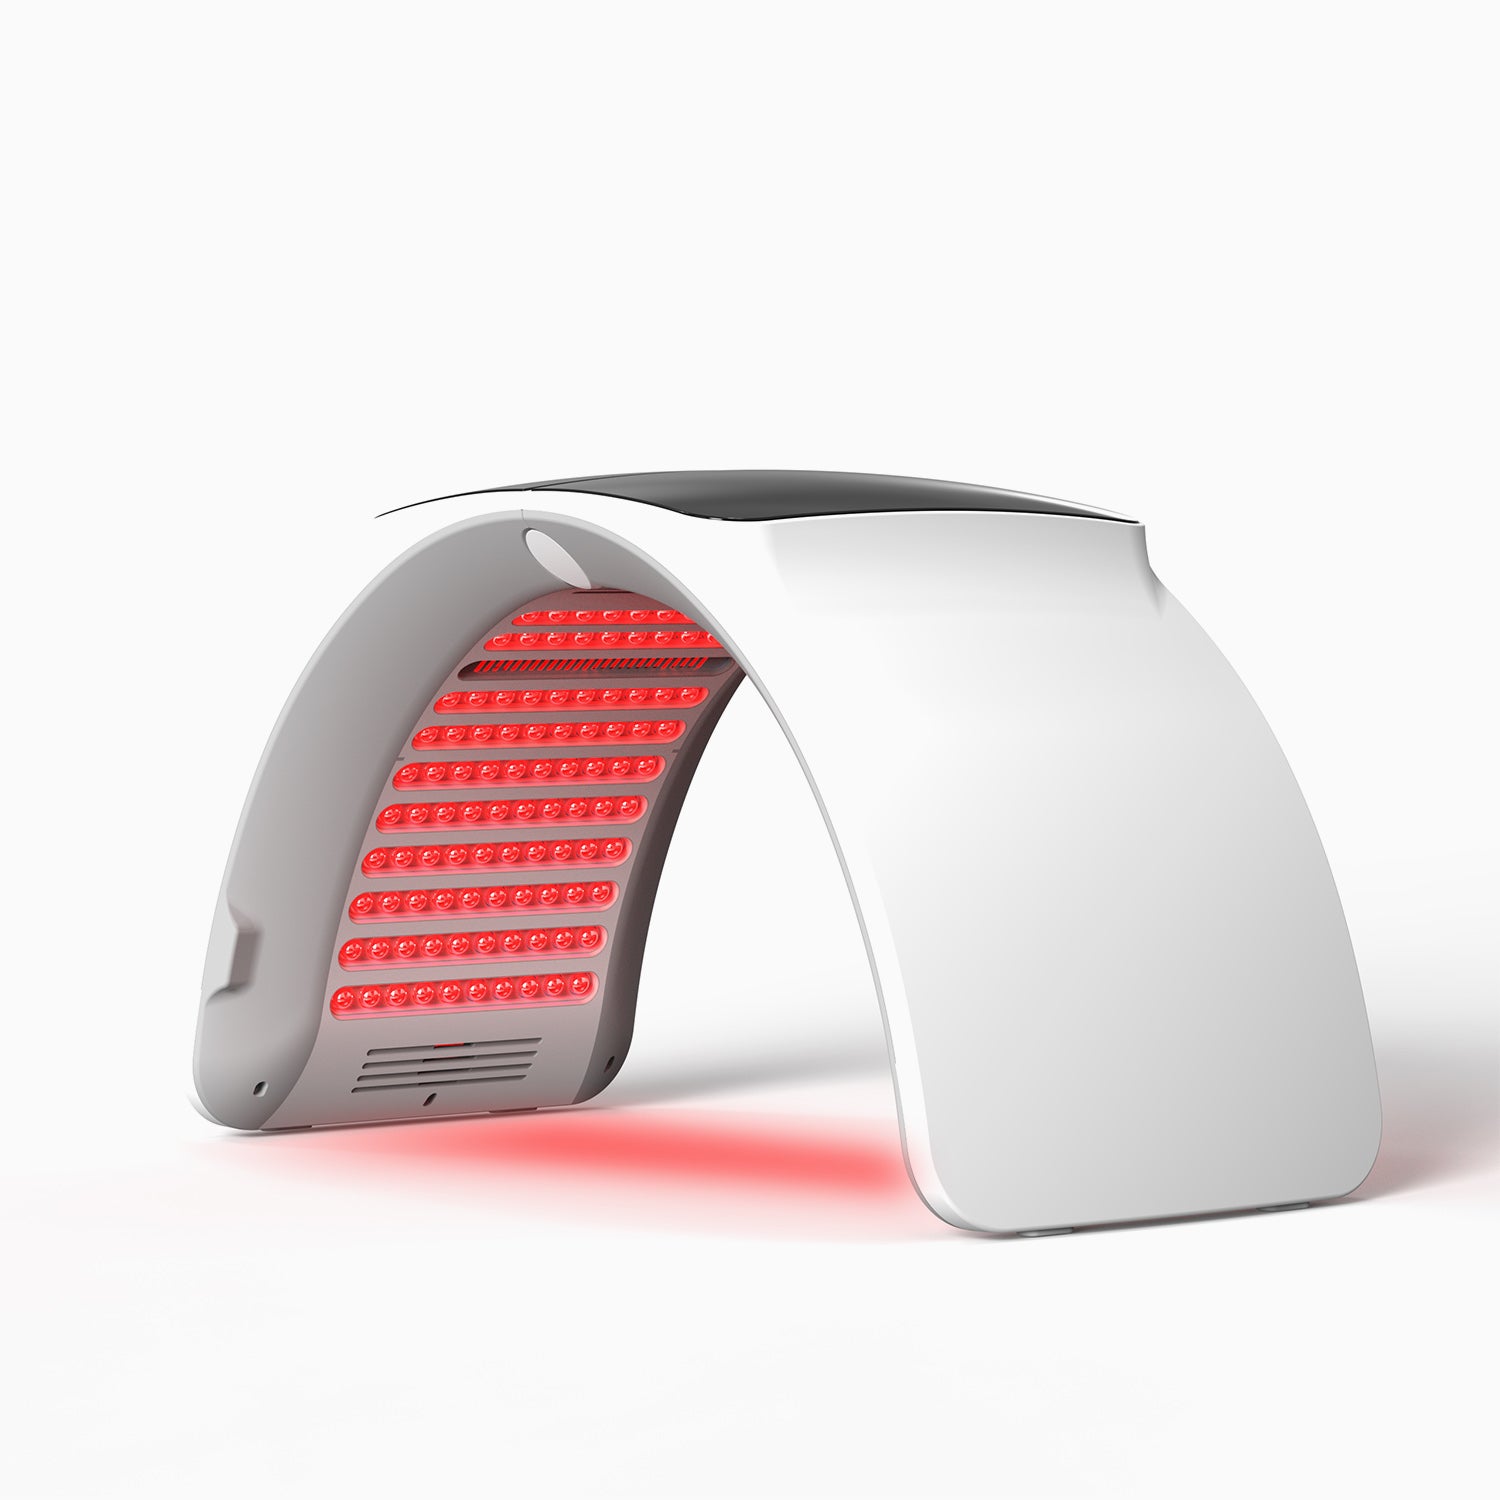 Swirise LED Light Therapy Device